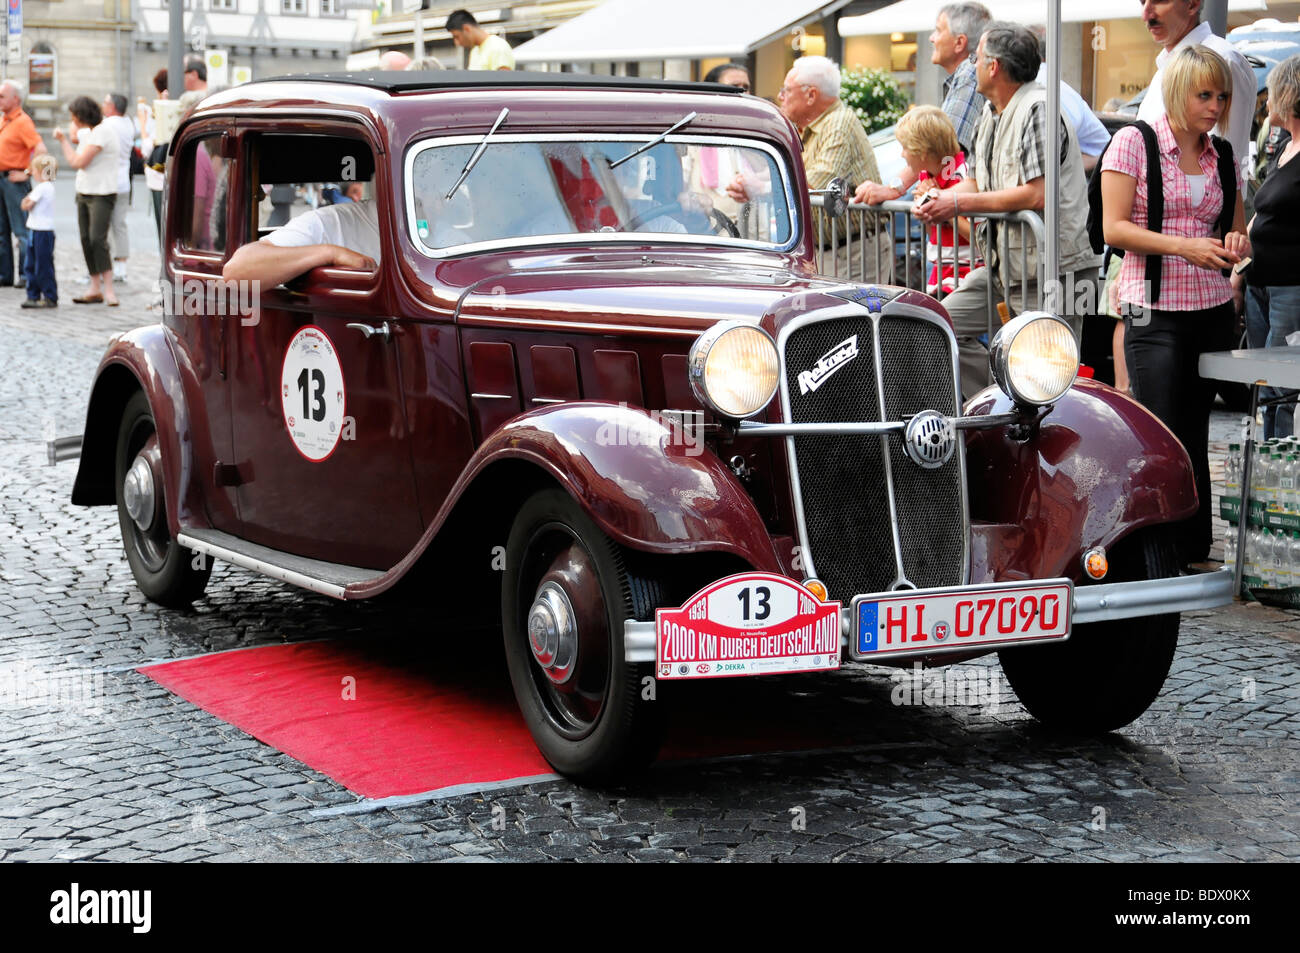 Hanomag Record, costruita nel 1933, 2000 km durch Deutschland rally 2009, 2000 km attraverso la Germania nel 2009, Schwaebisch Gmuend, Baden Foto Stock